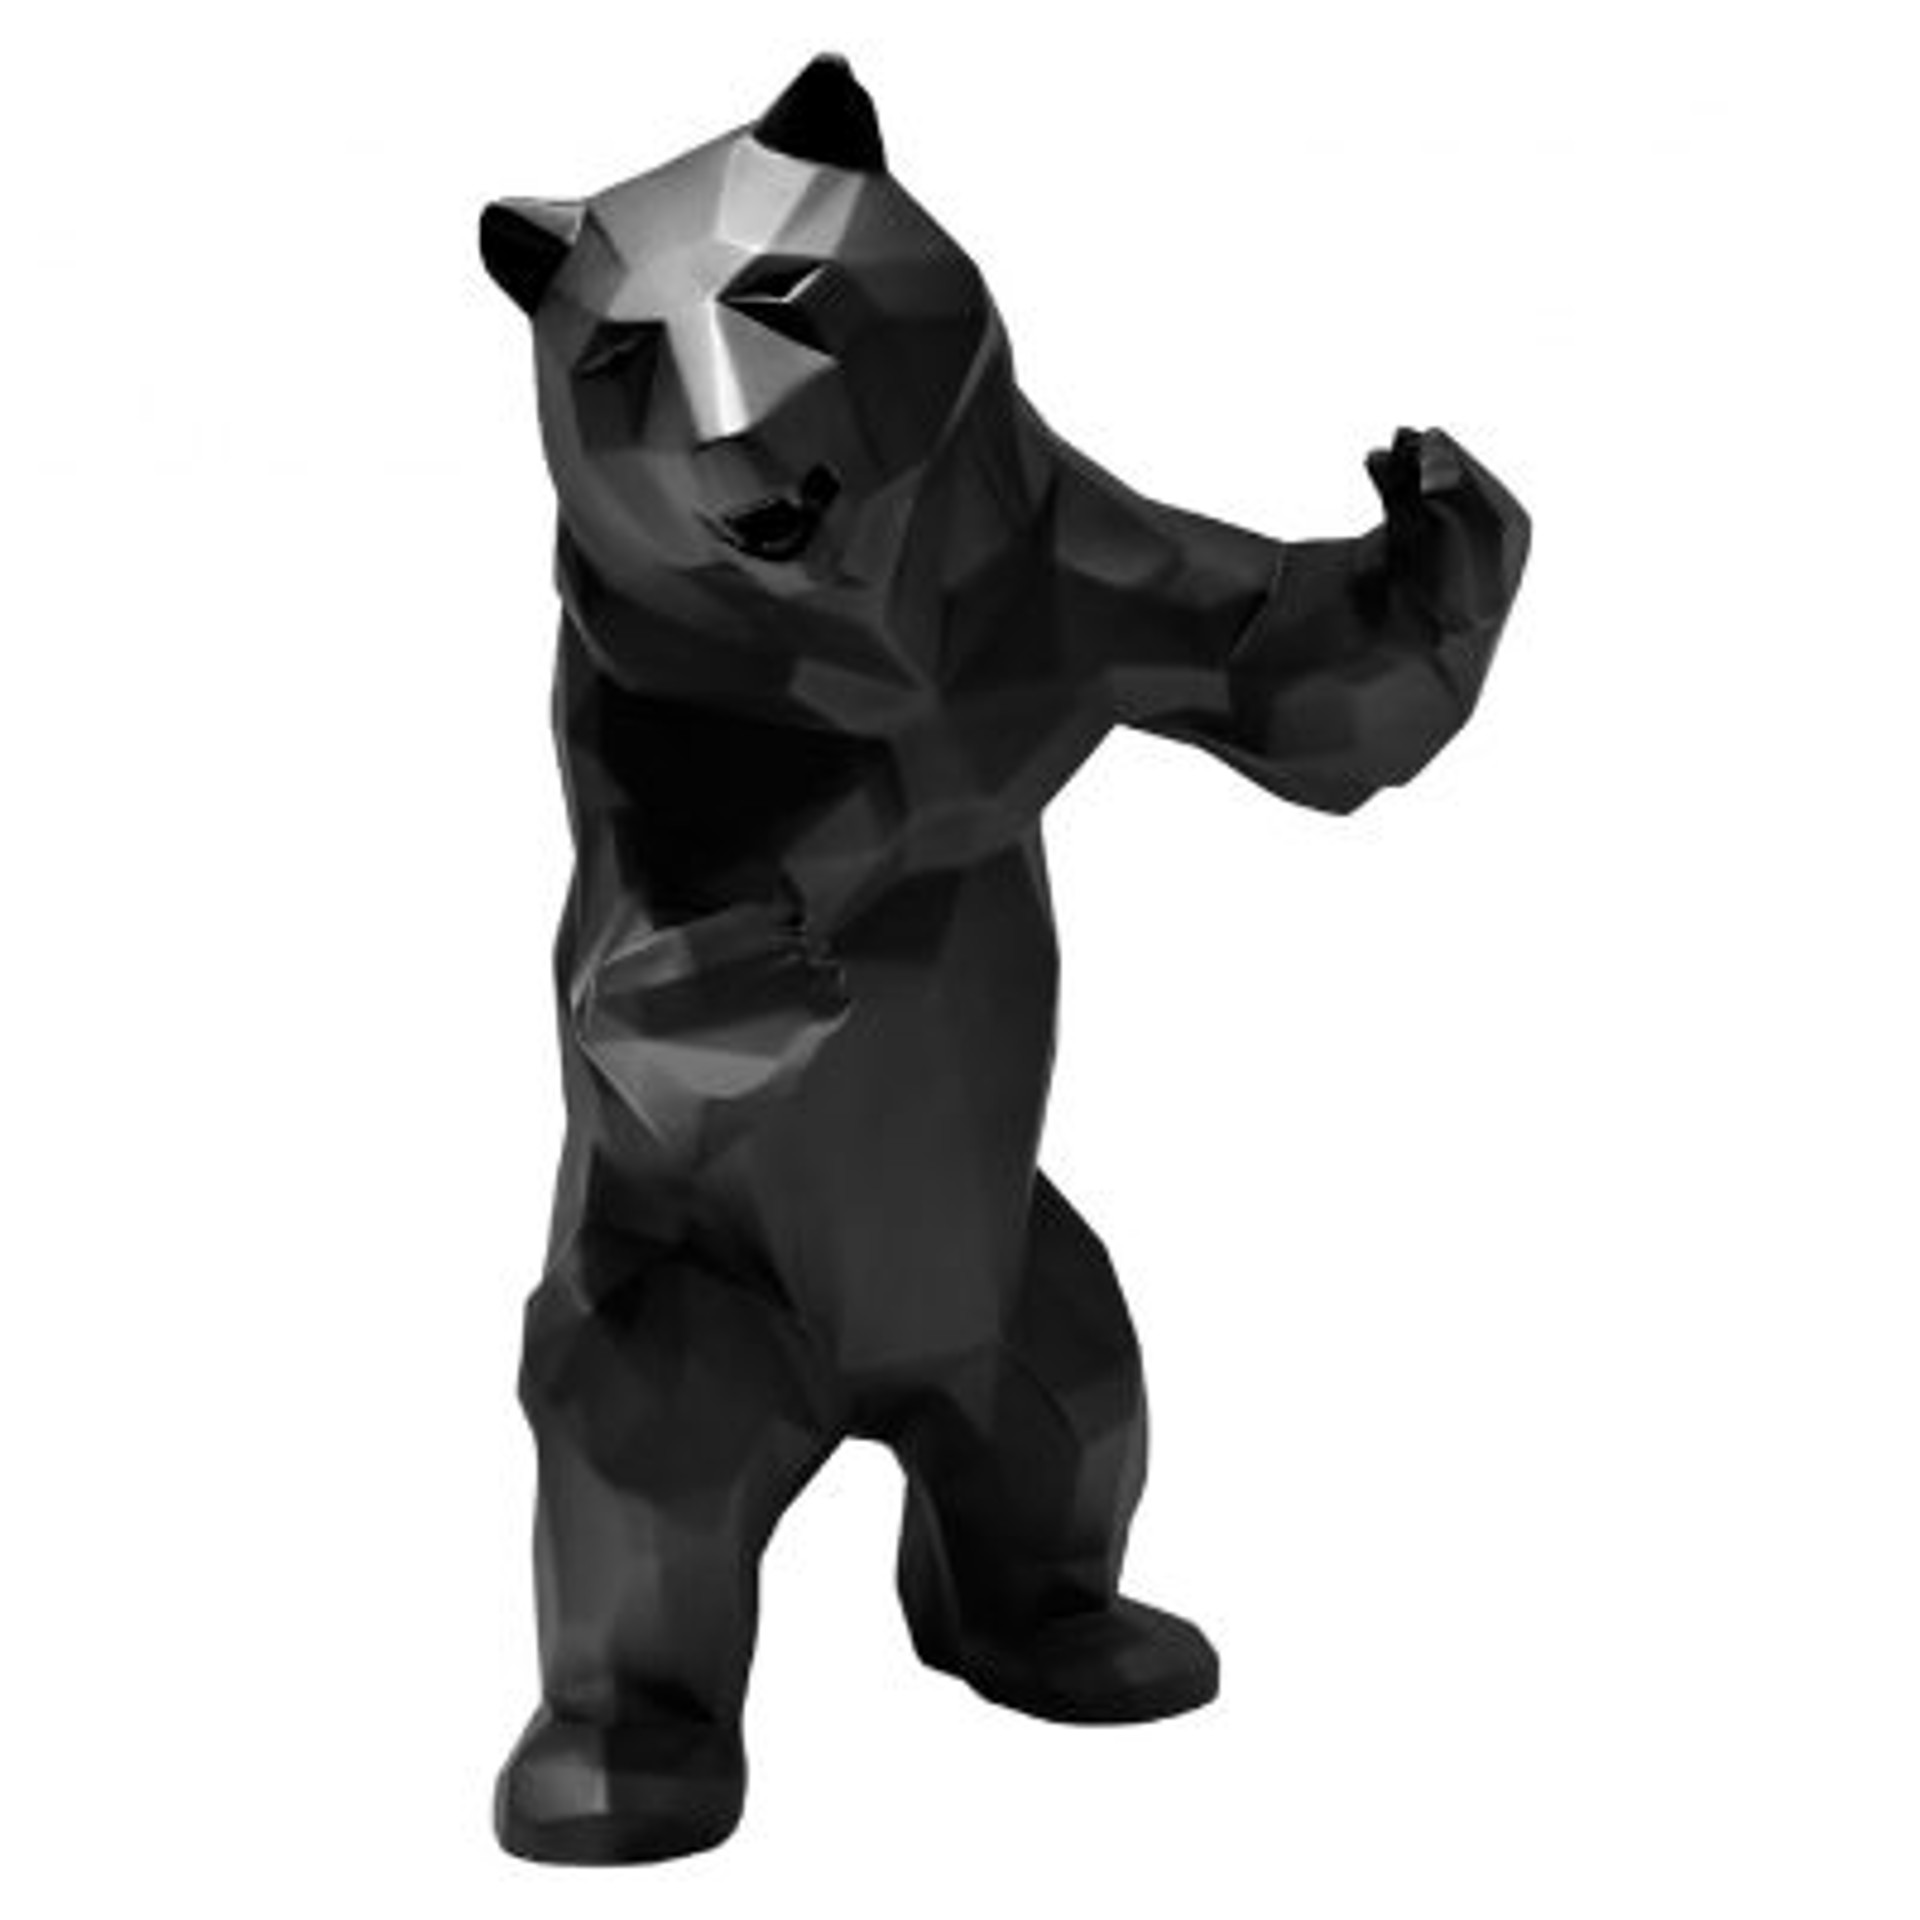 Black "Standing Bear" by Richard Orlinski